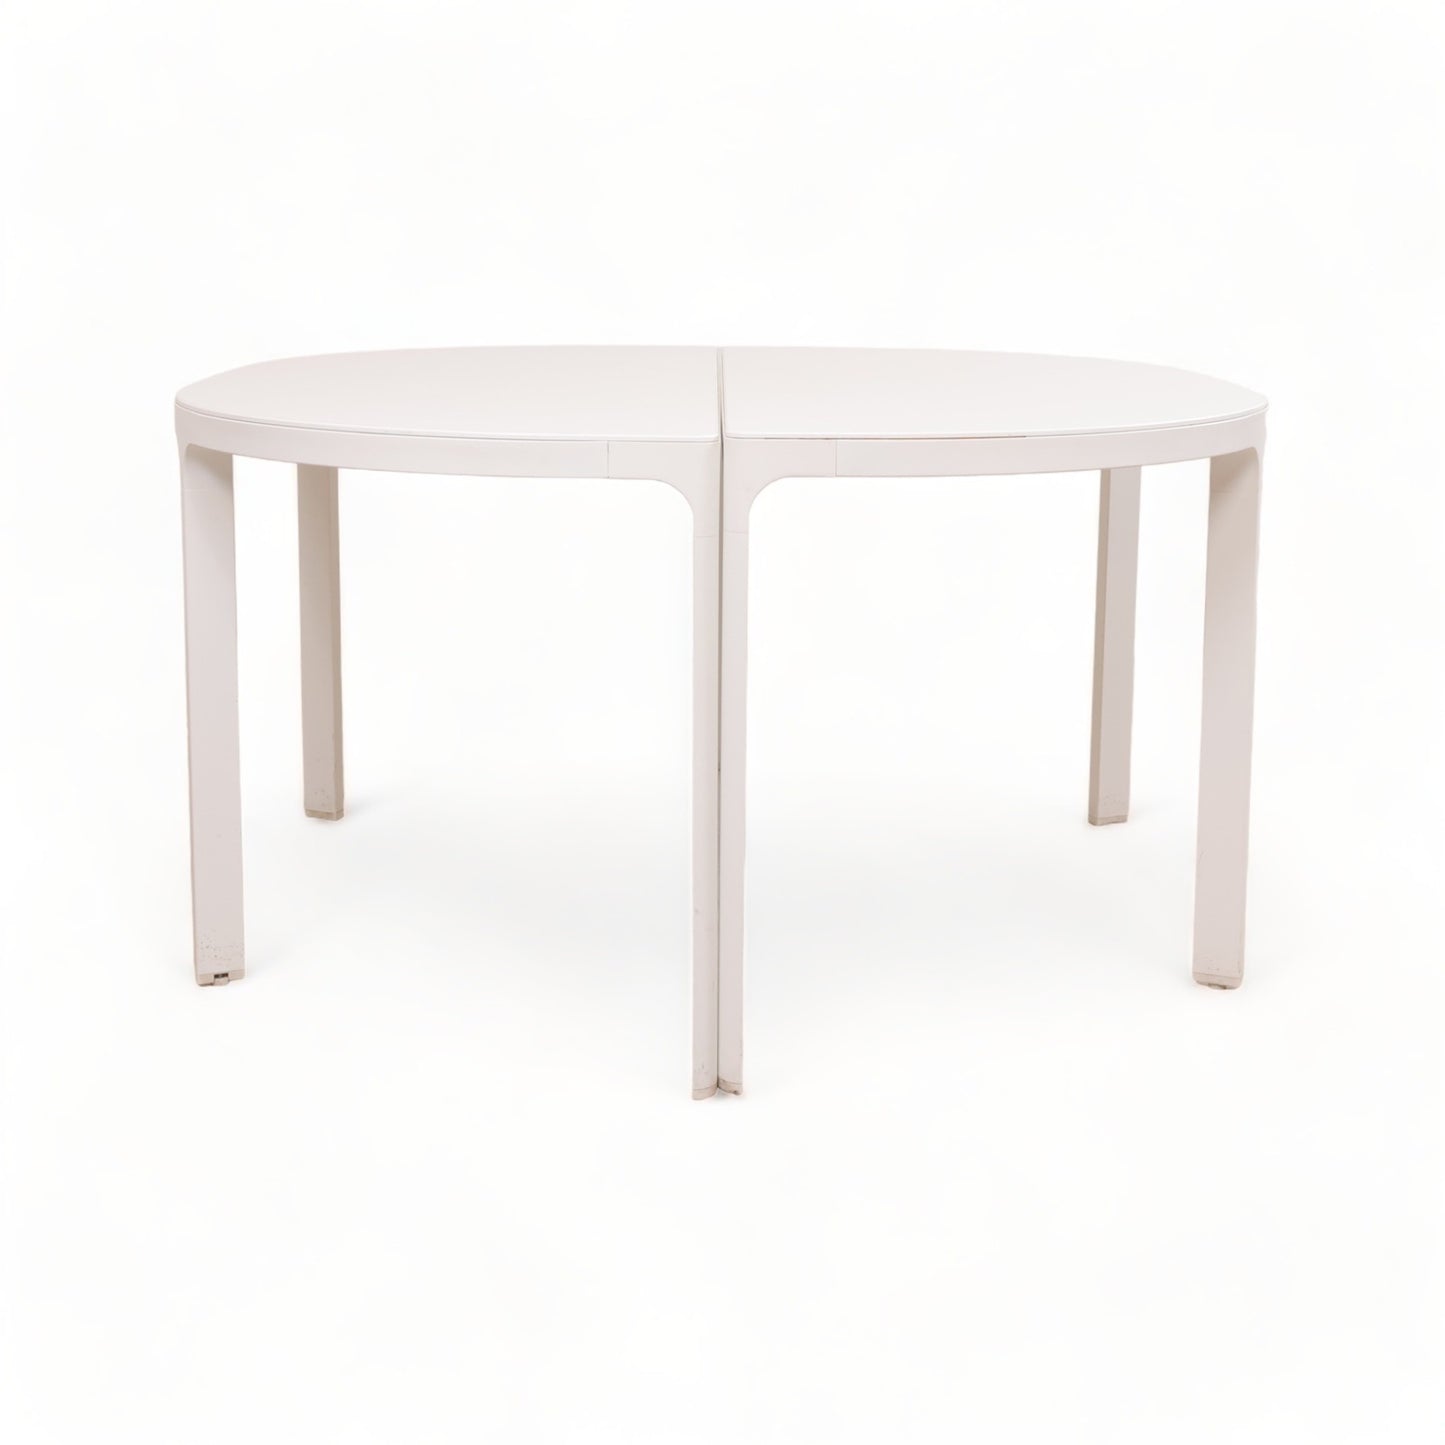 IKEA halvsirkel bord, 2 deler